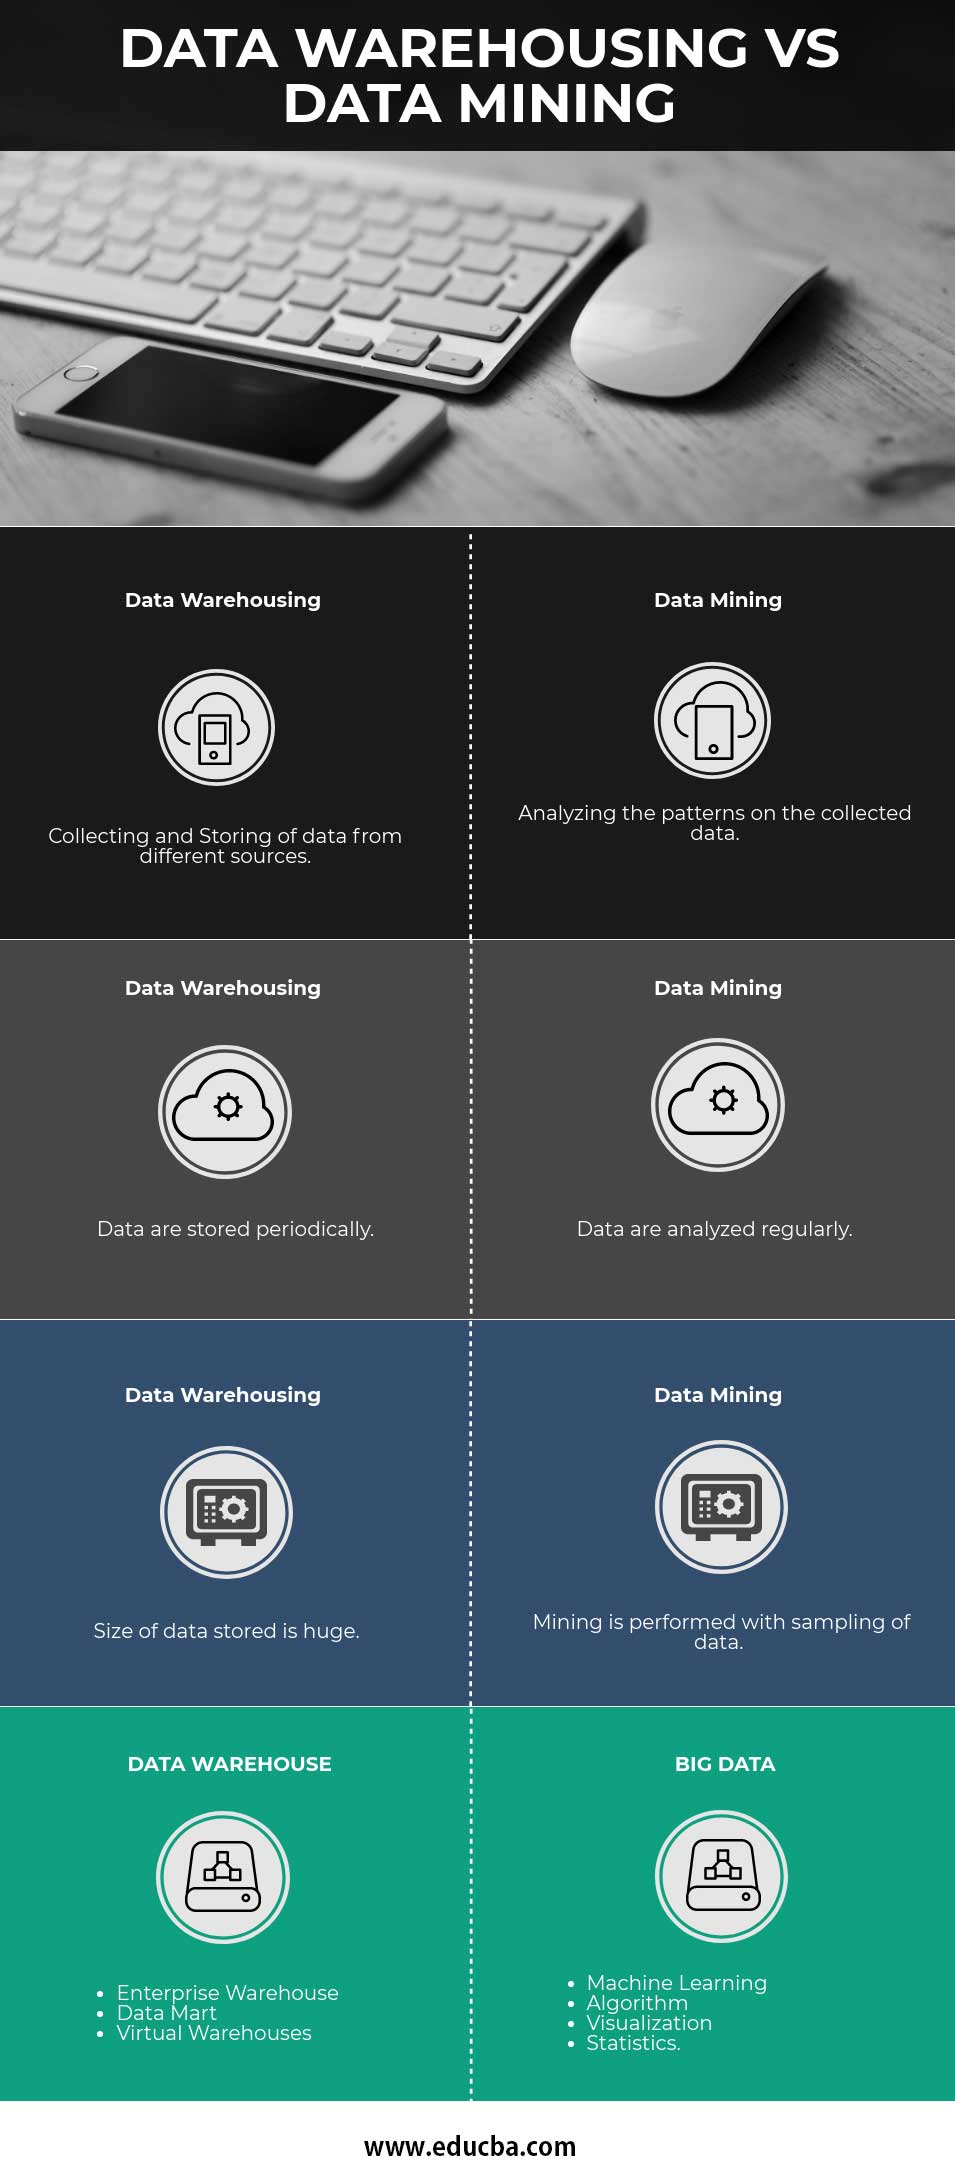  Data Mining vs Data warehousing 